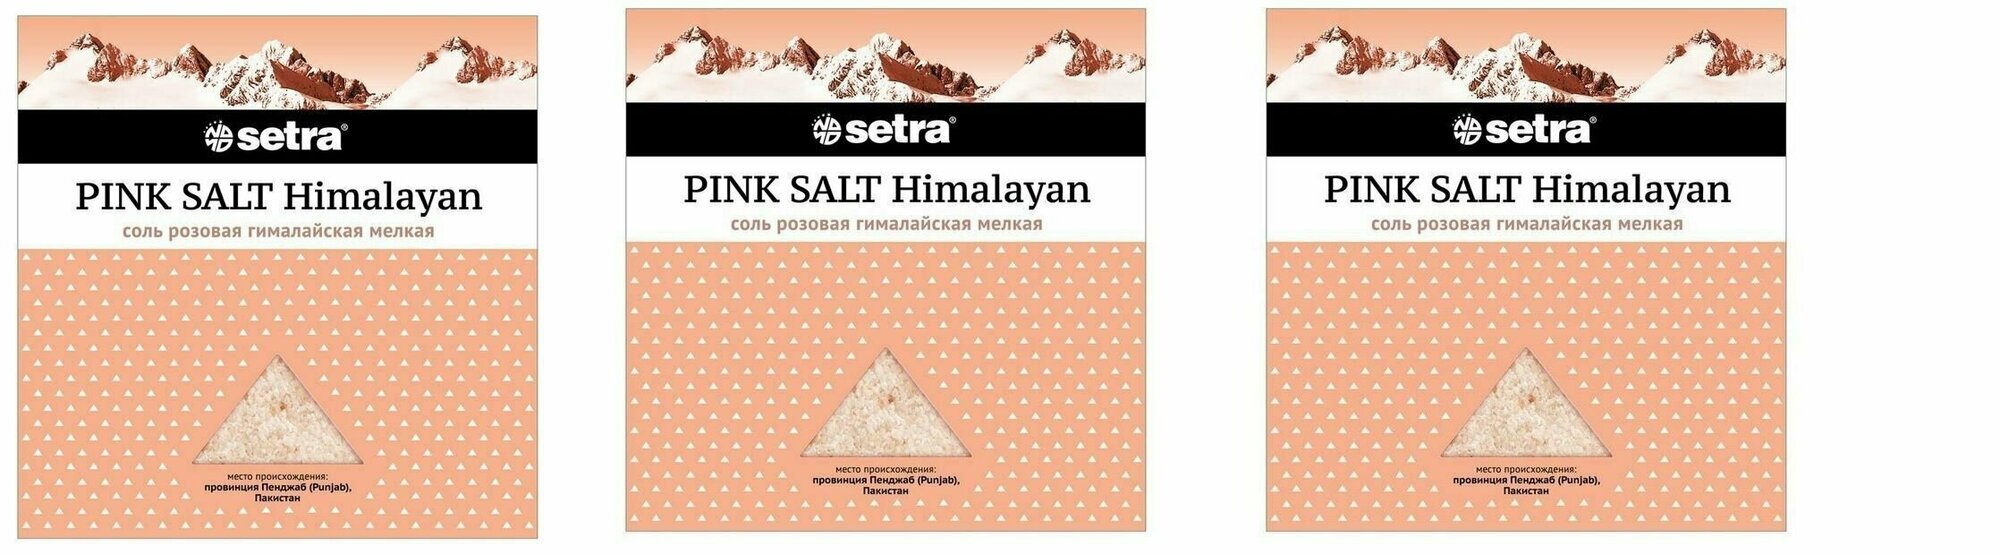 Соль Setra, Гималайская, розовая, натуральная, мелкая, 500 г, 3 уп